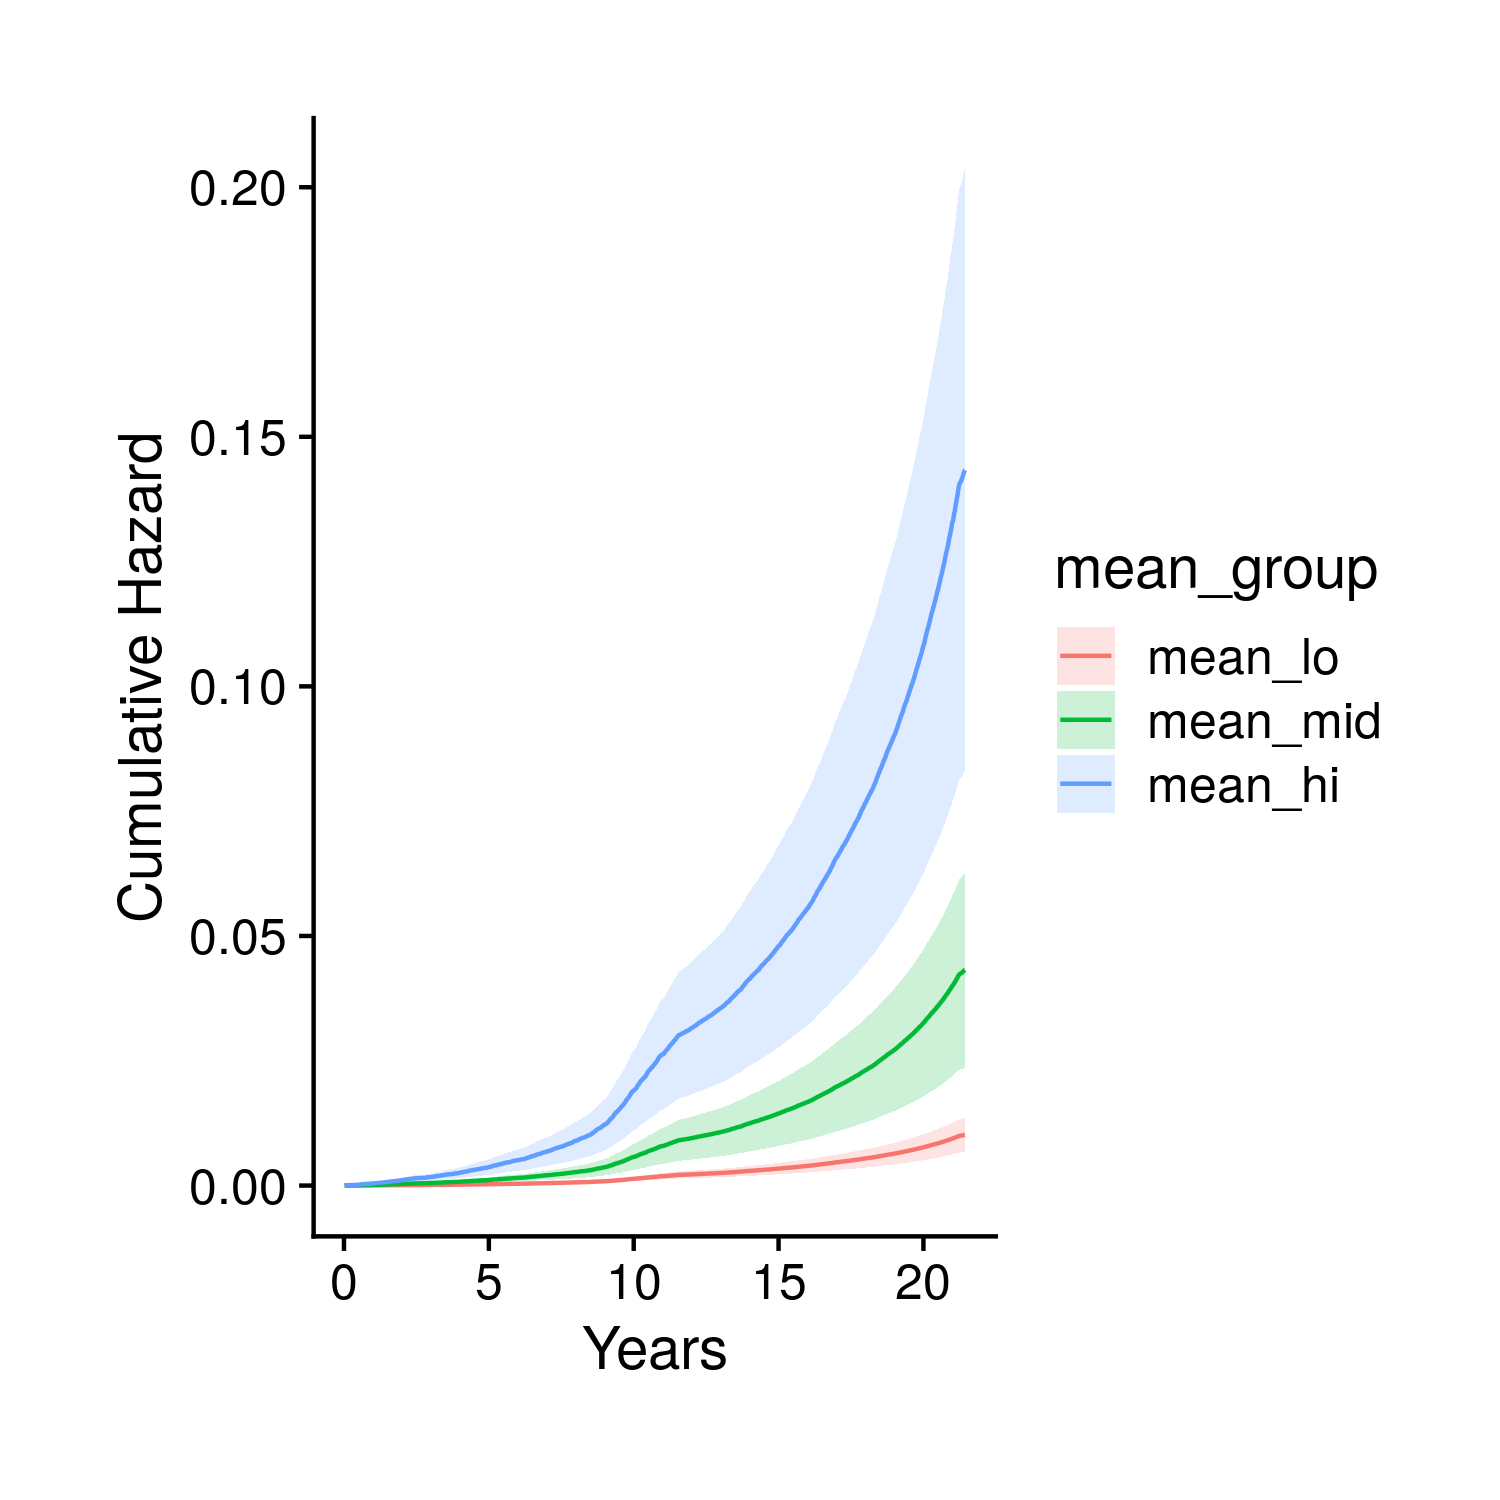 Kaplain-Meier style curve stratified by polygenic risk score quantiles